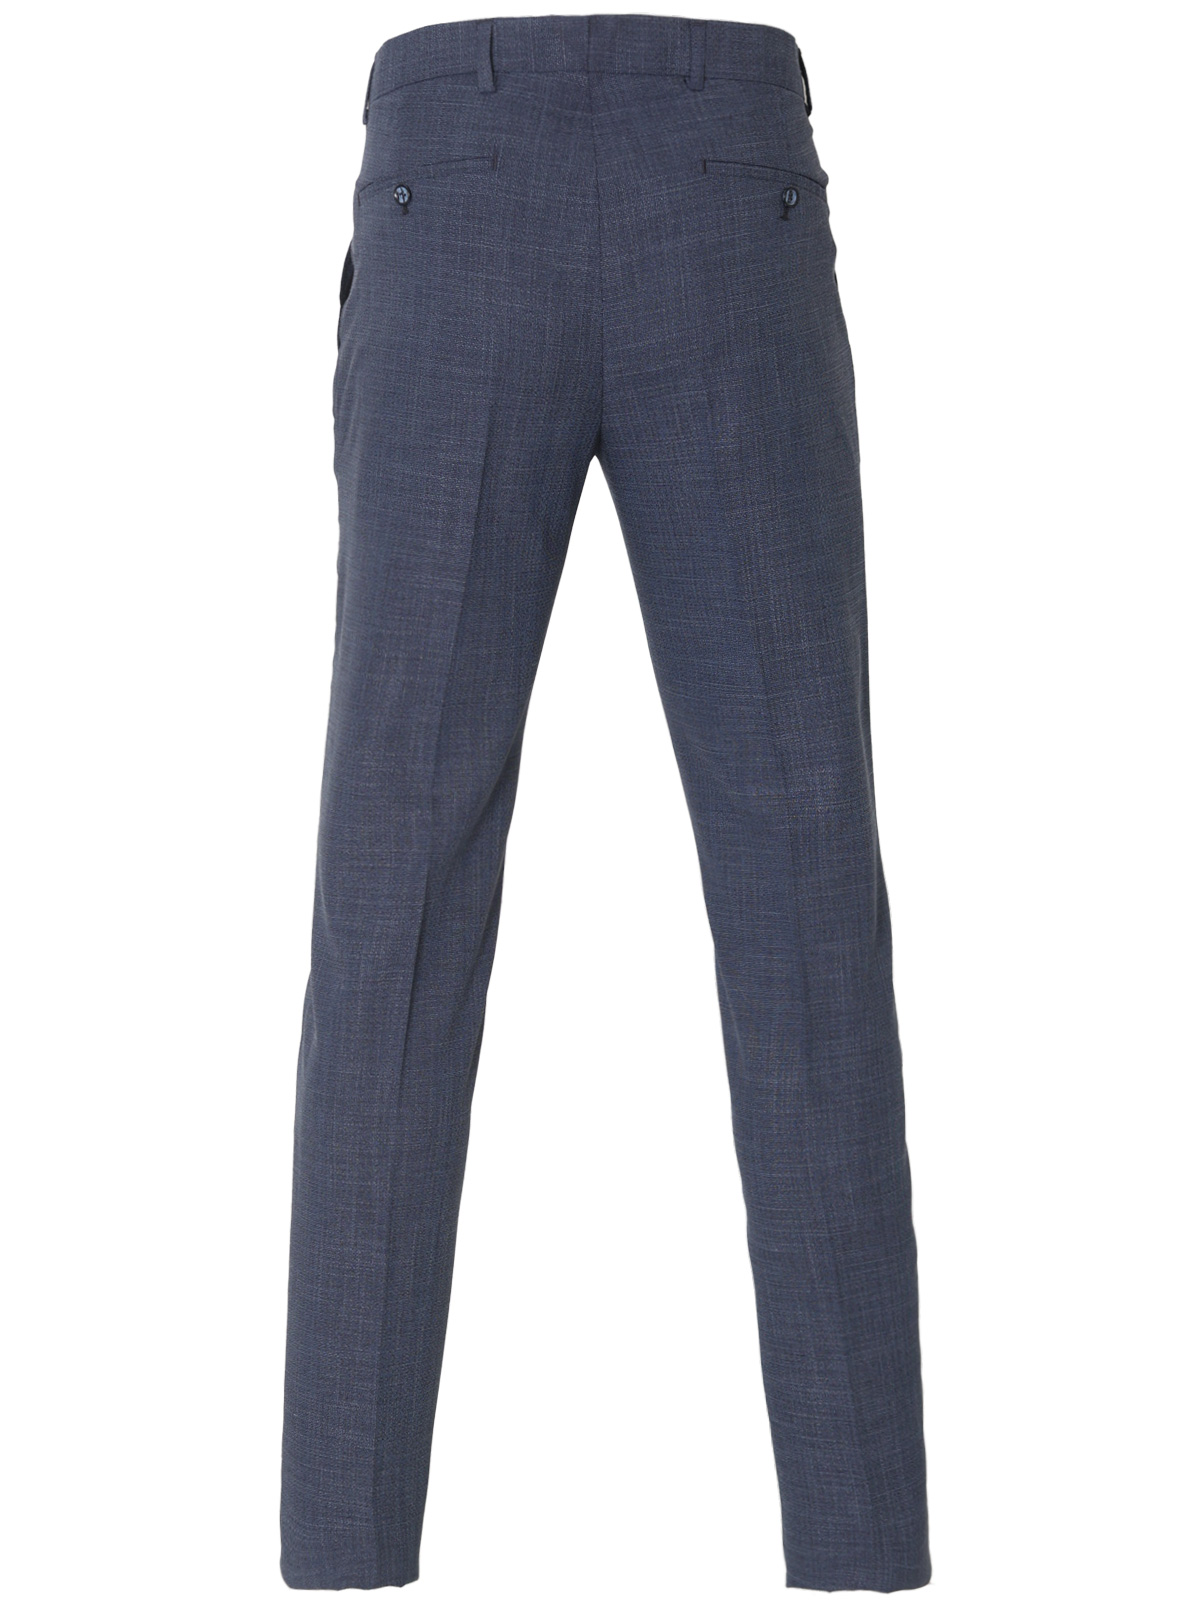 Pantaloni eleganti in albastru melange - 63340 € 62.99 img2